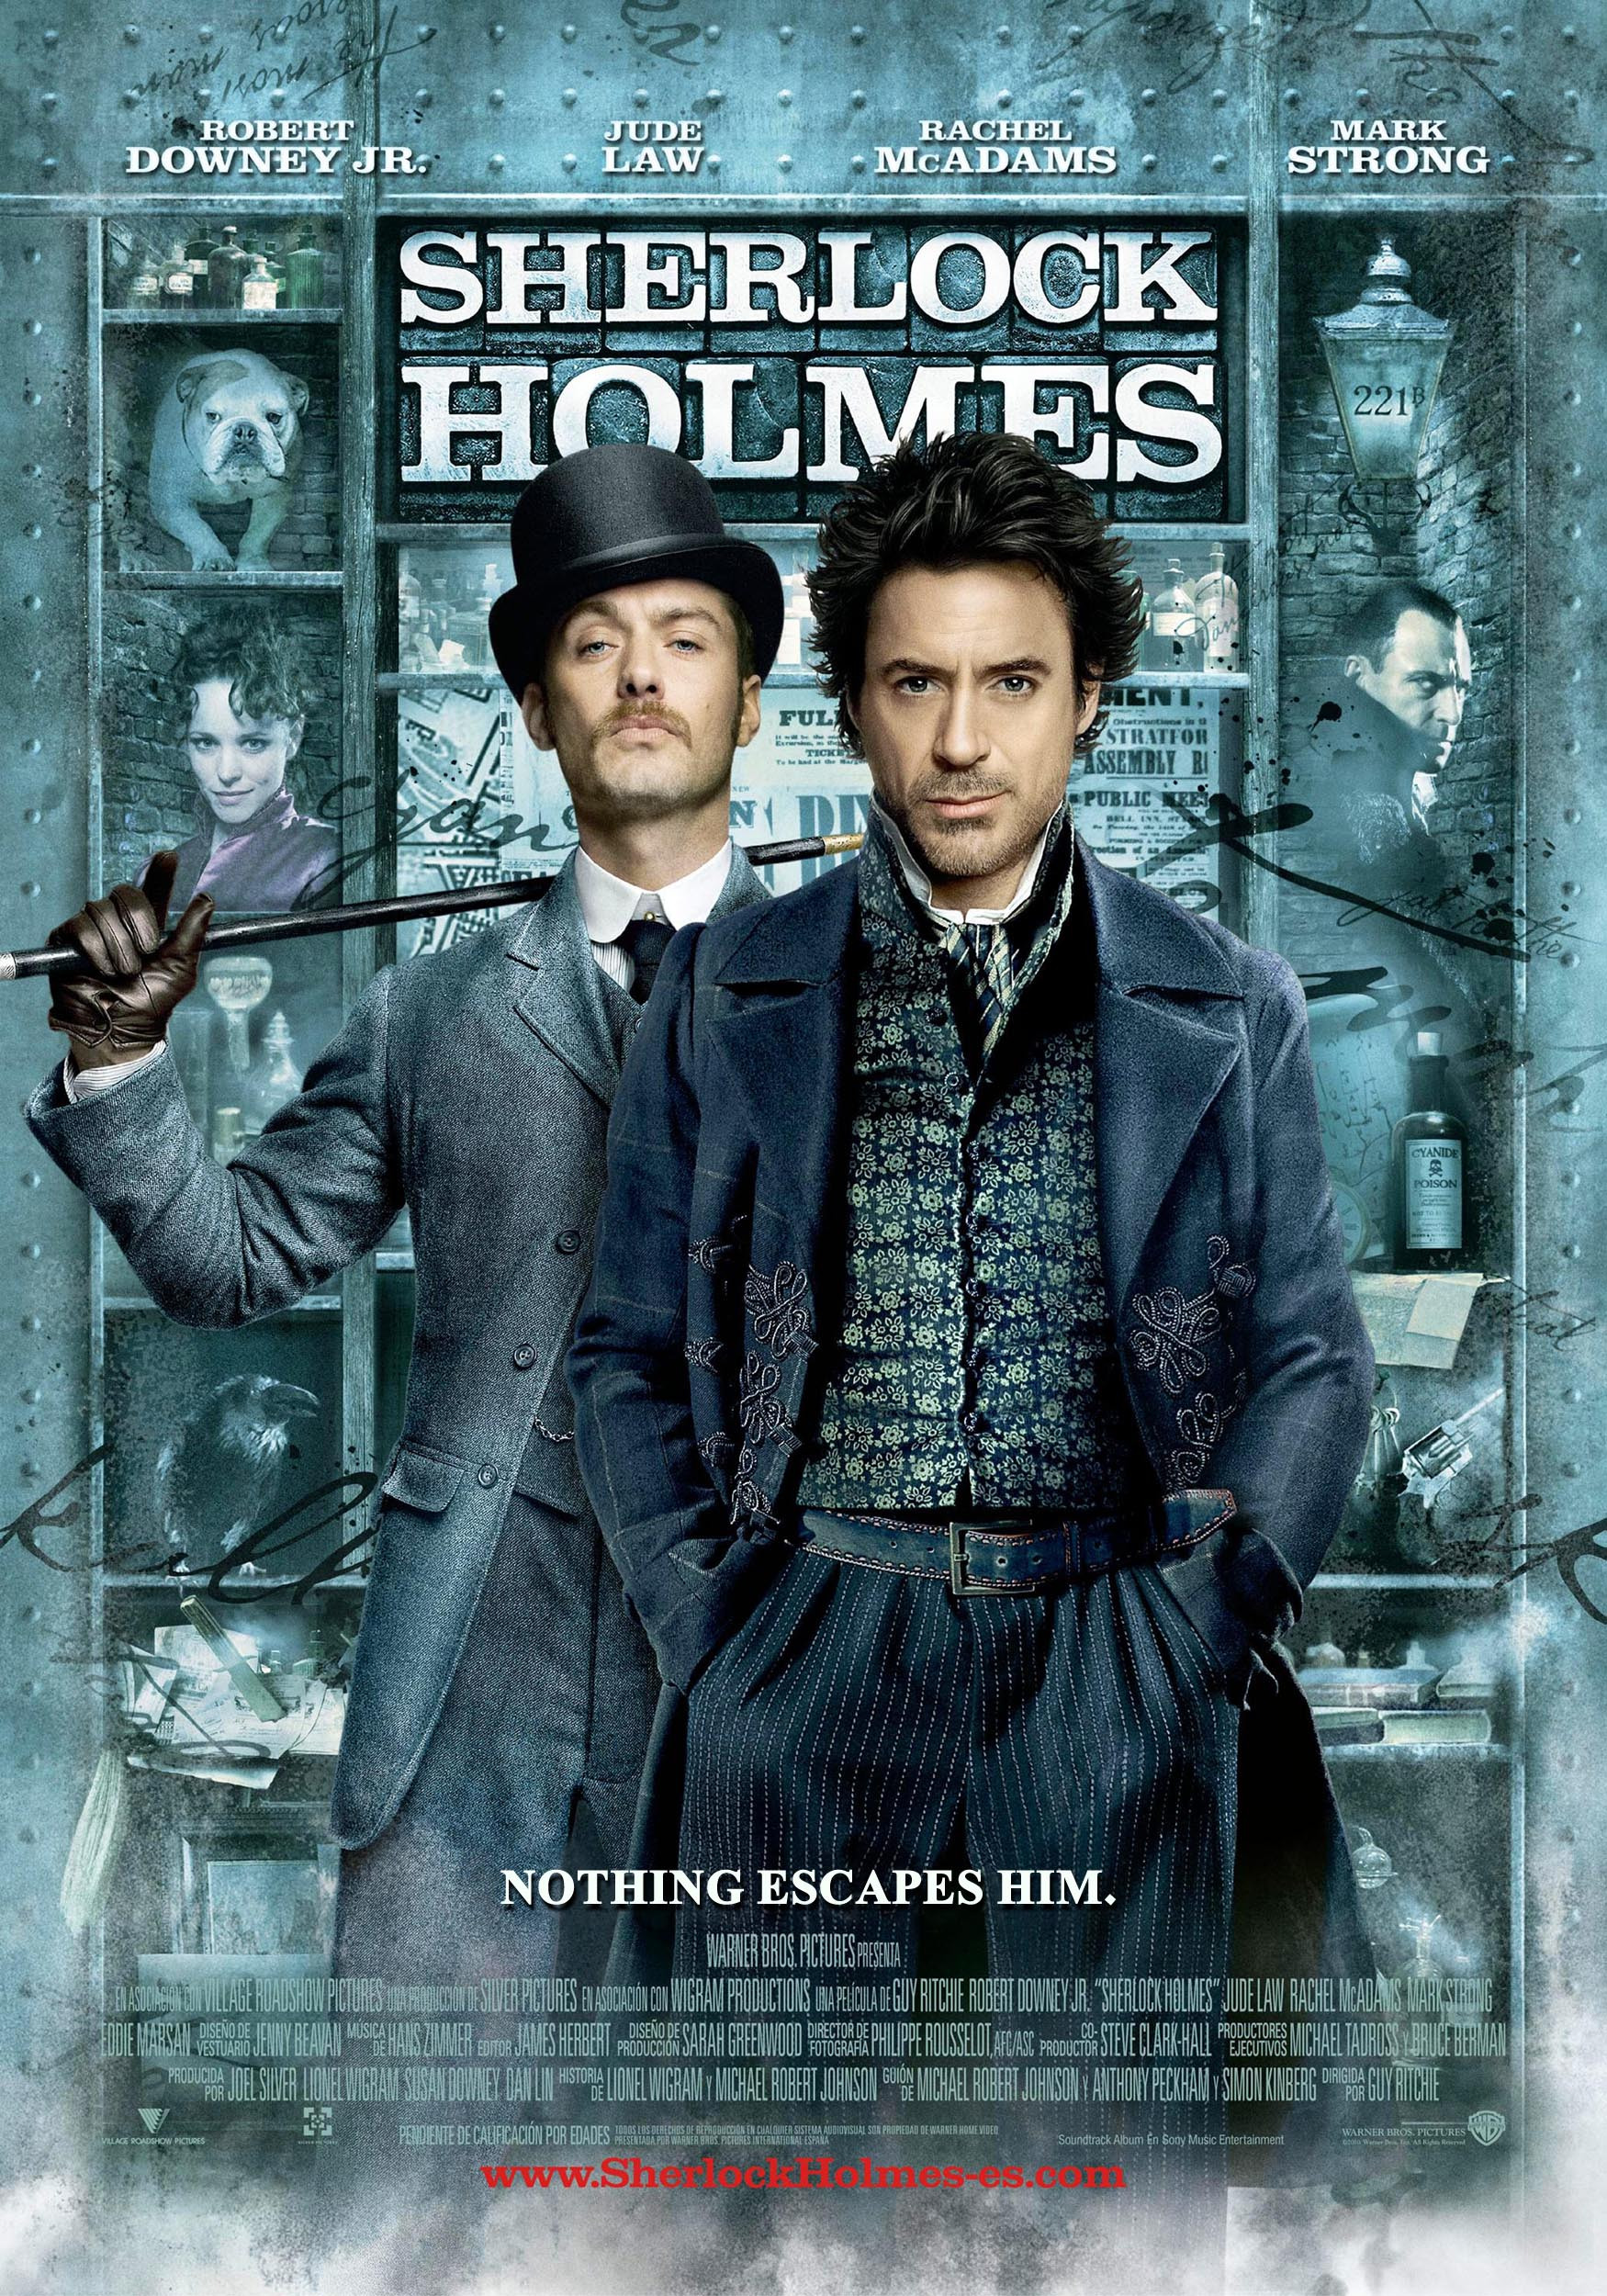 Sherlock Holmes and the case of the constant reboot, reinterpretation